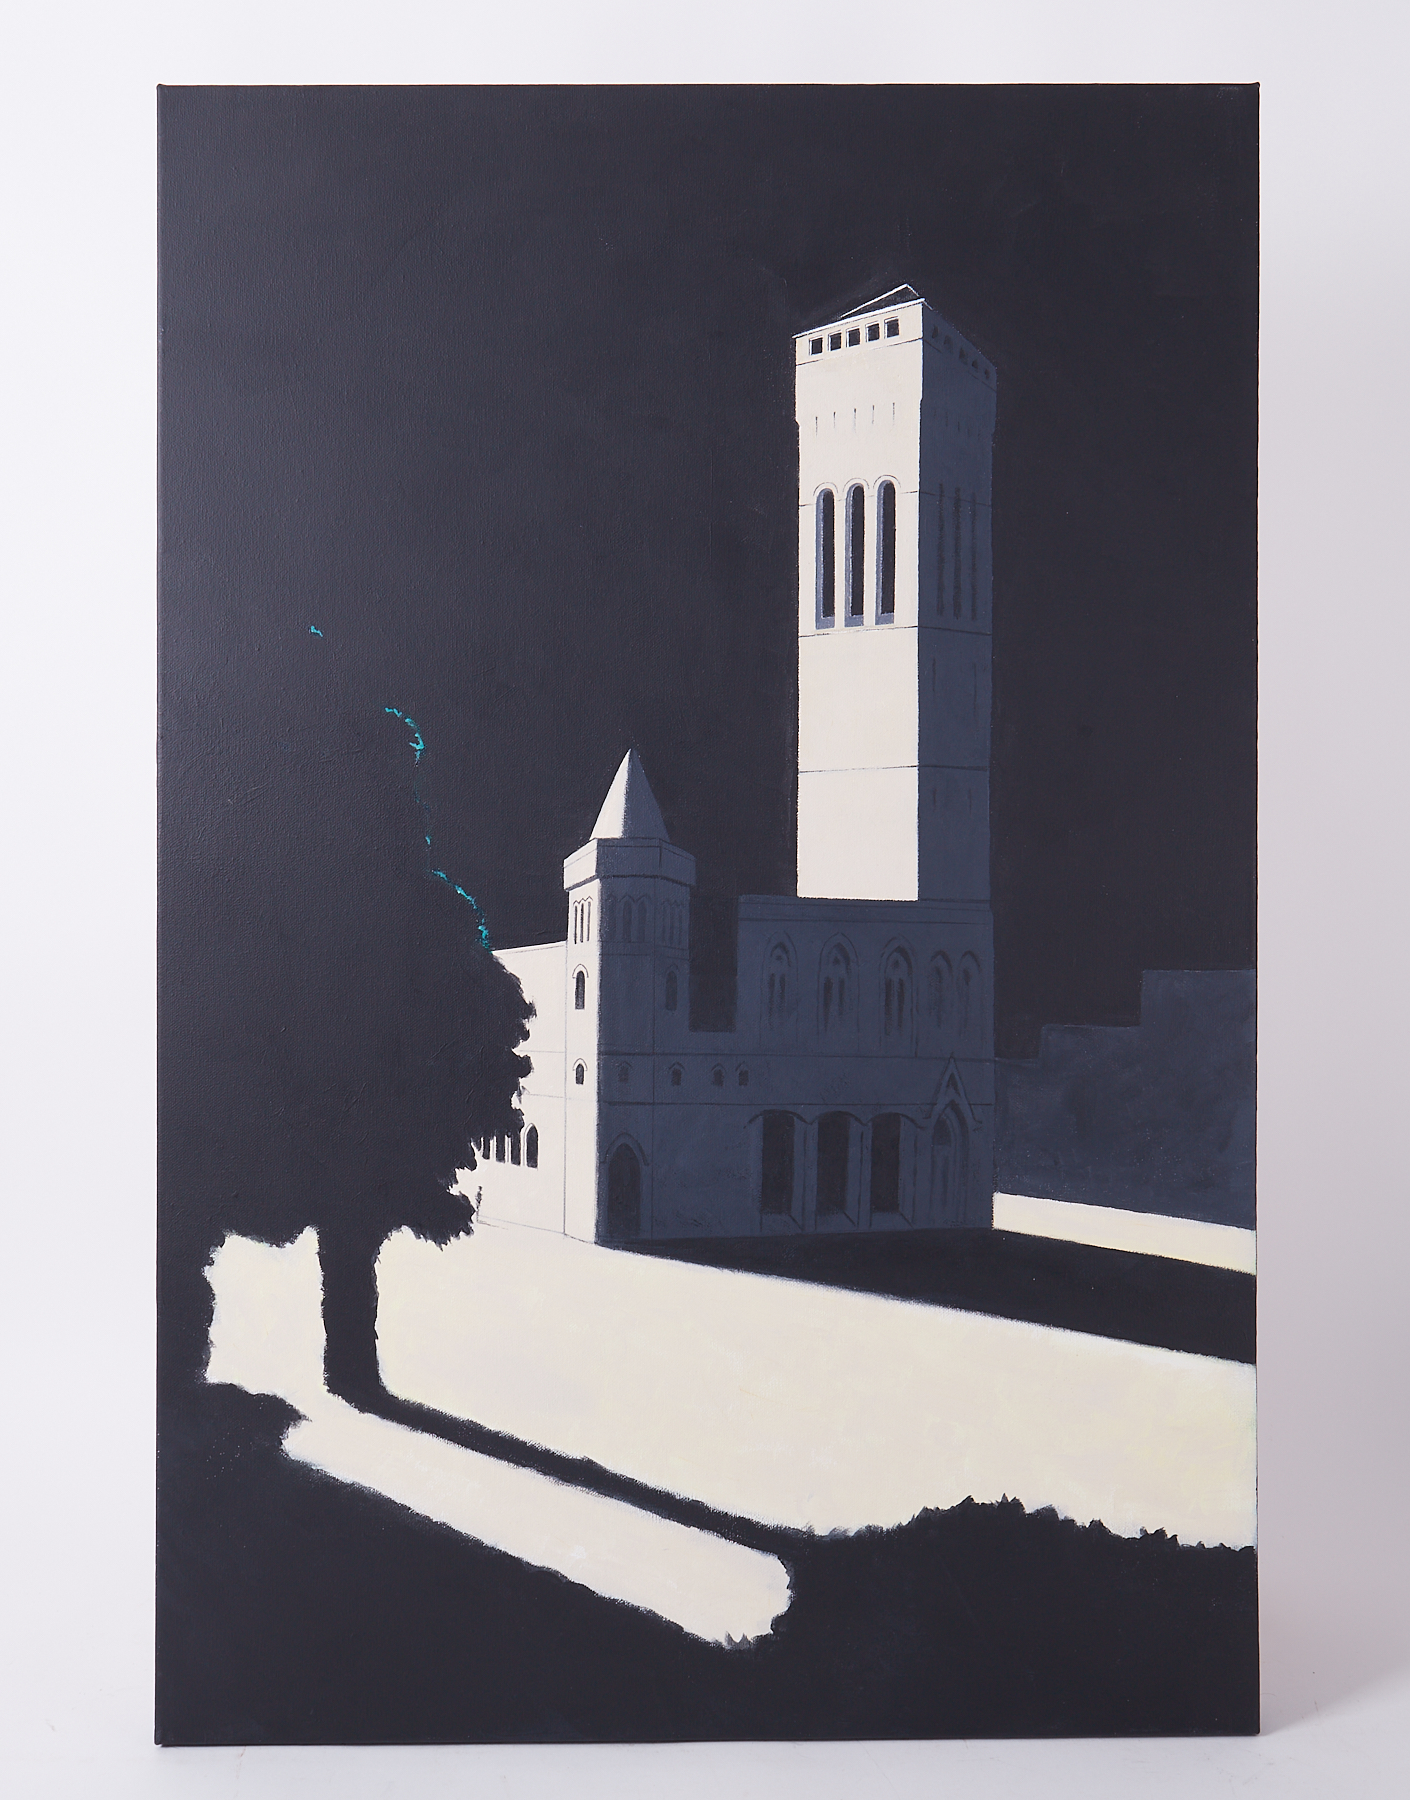 Mike Hanny (Plymouth artist) 'Guildhall, Dawn Light', acrylic on canvas, 91cm x 61cm, unframed. Mike